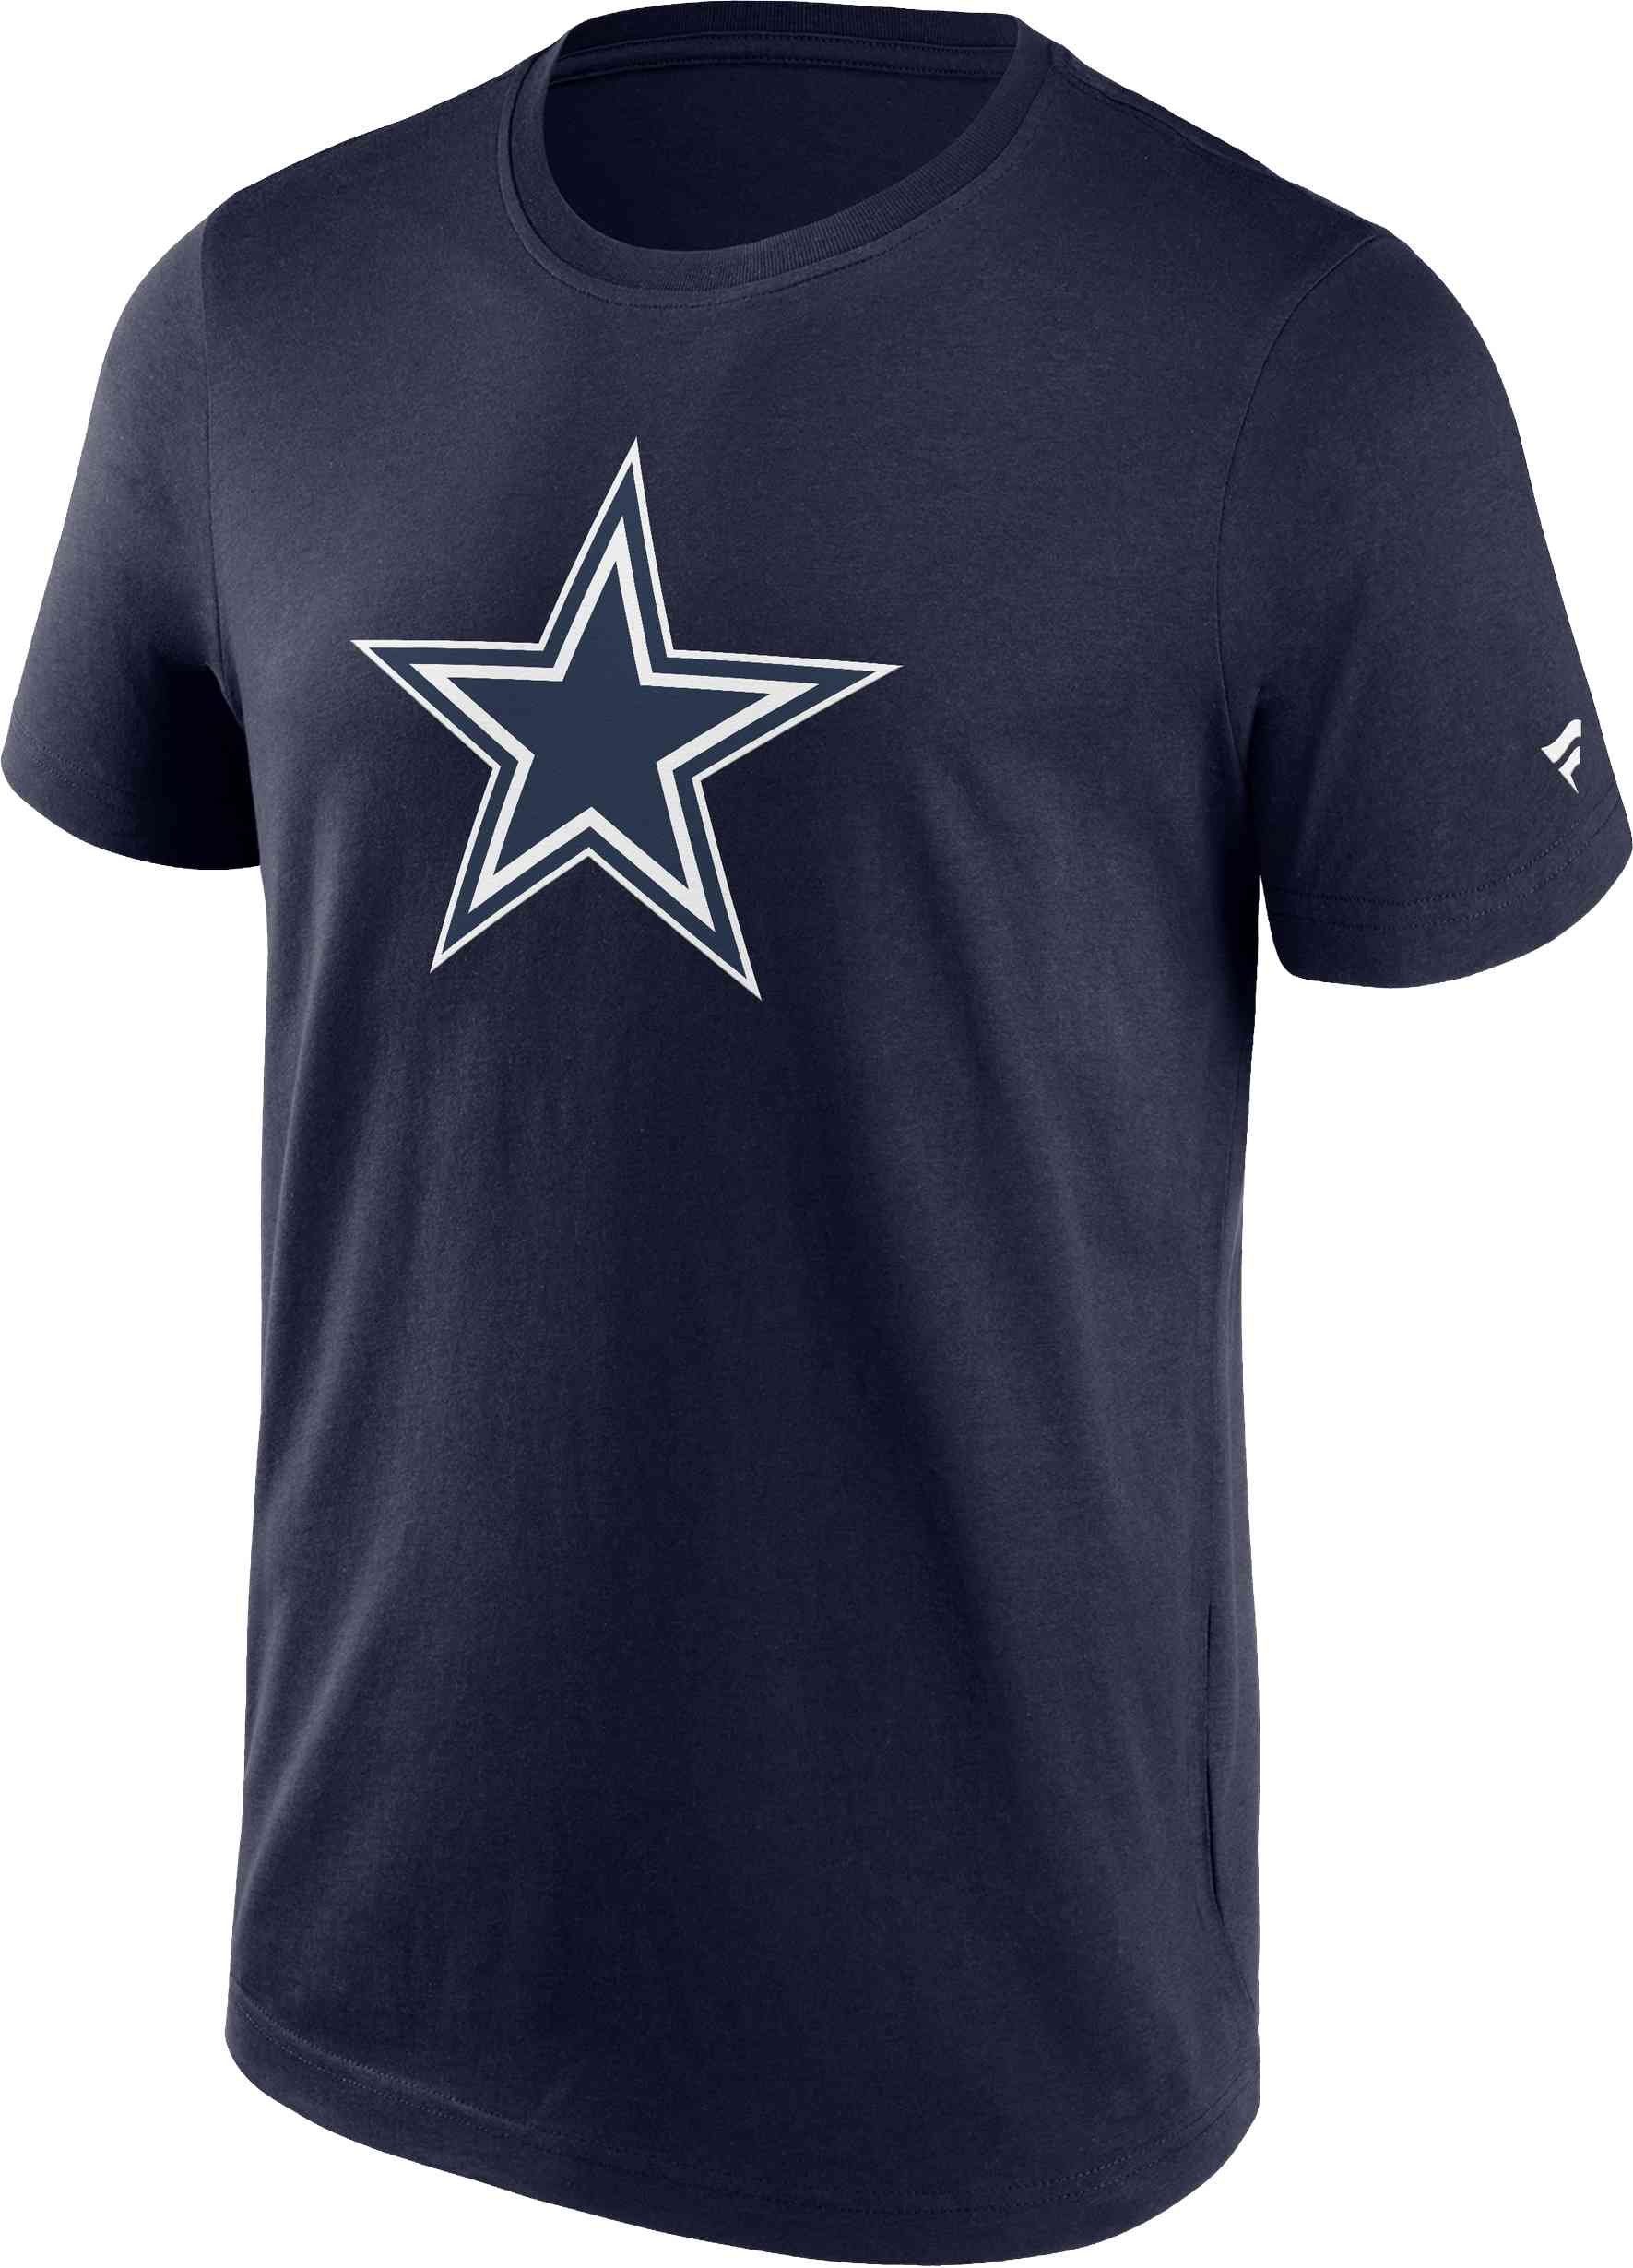 Fanatics T-Shirt NFL Dallas Cowboys Primary Logo Graphic